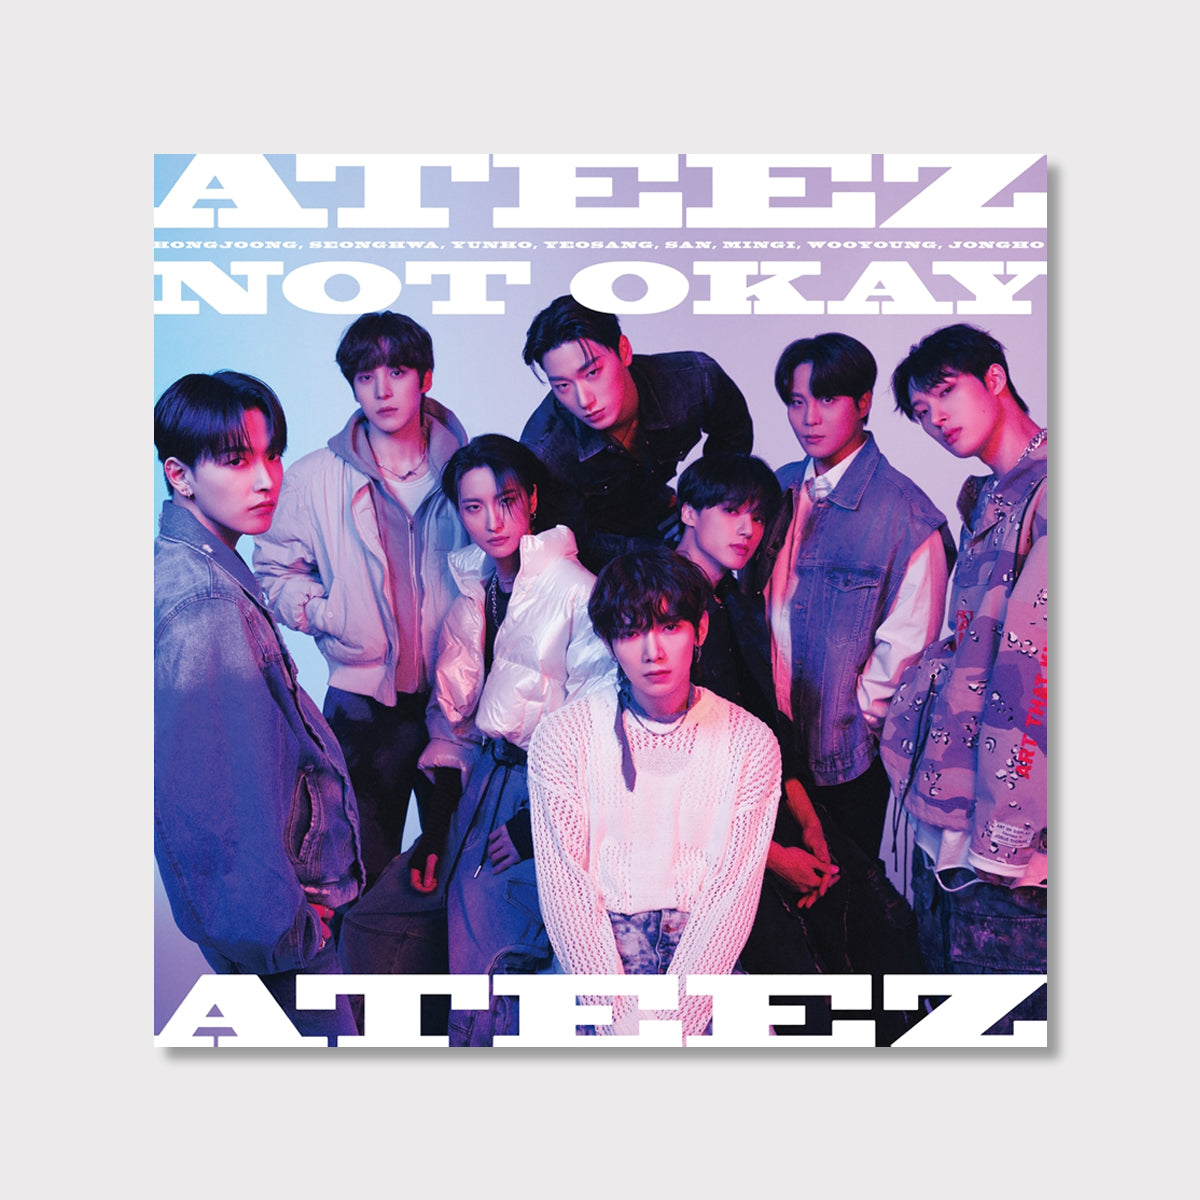 ATEEZ - JAPAN 3RD SINGLE - NOT OKAY